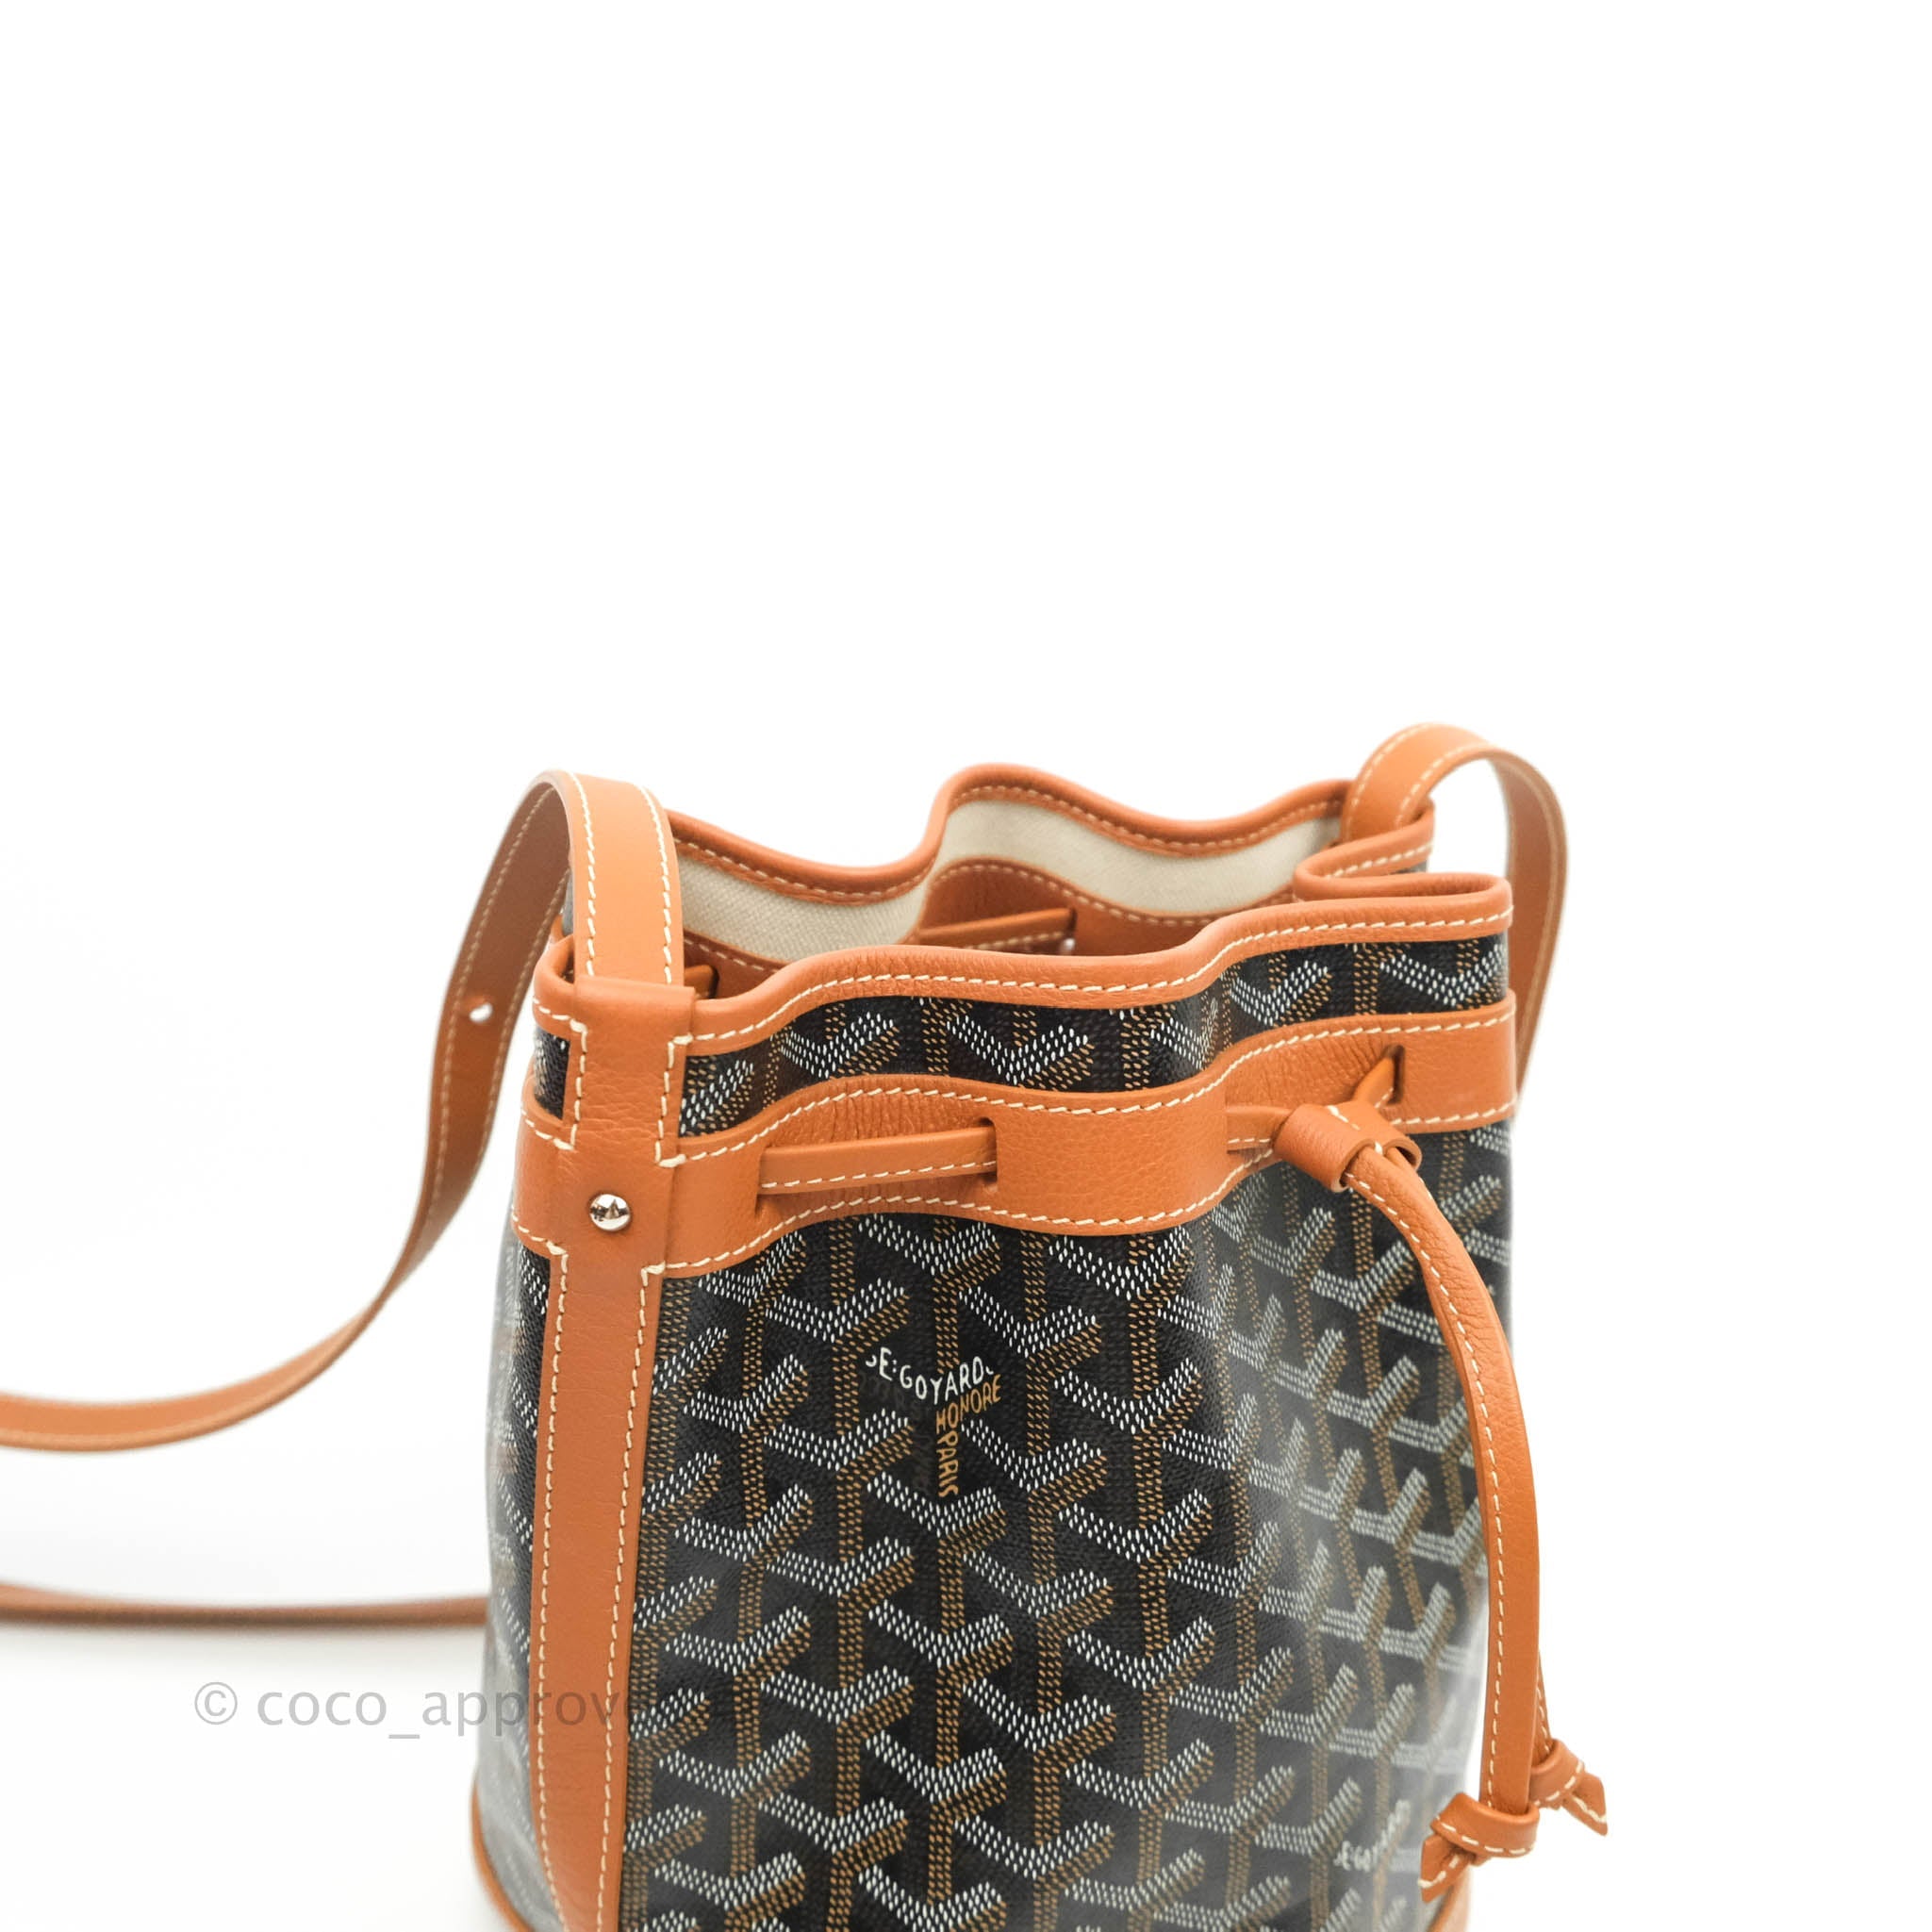 Goyard Petit Flot Black Drawstring Bucket Bag – Coco Approved Studio